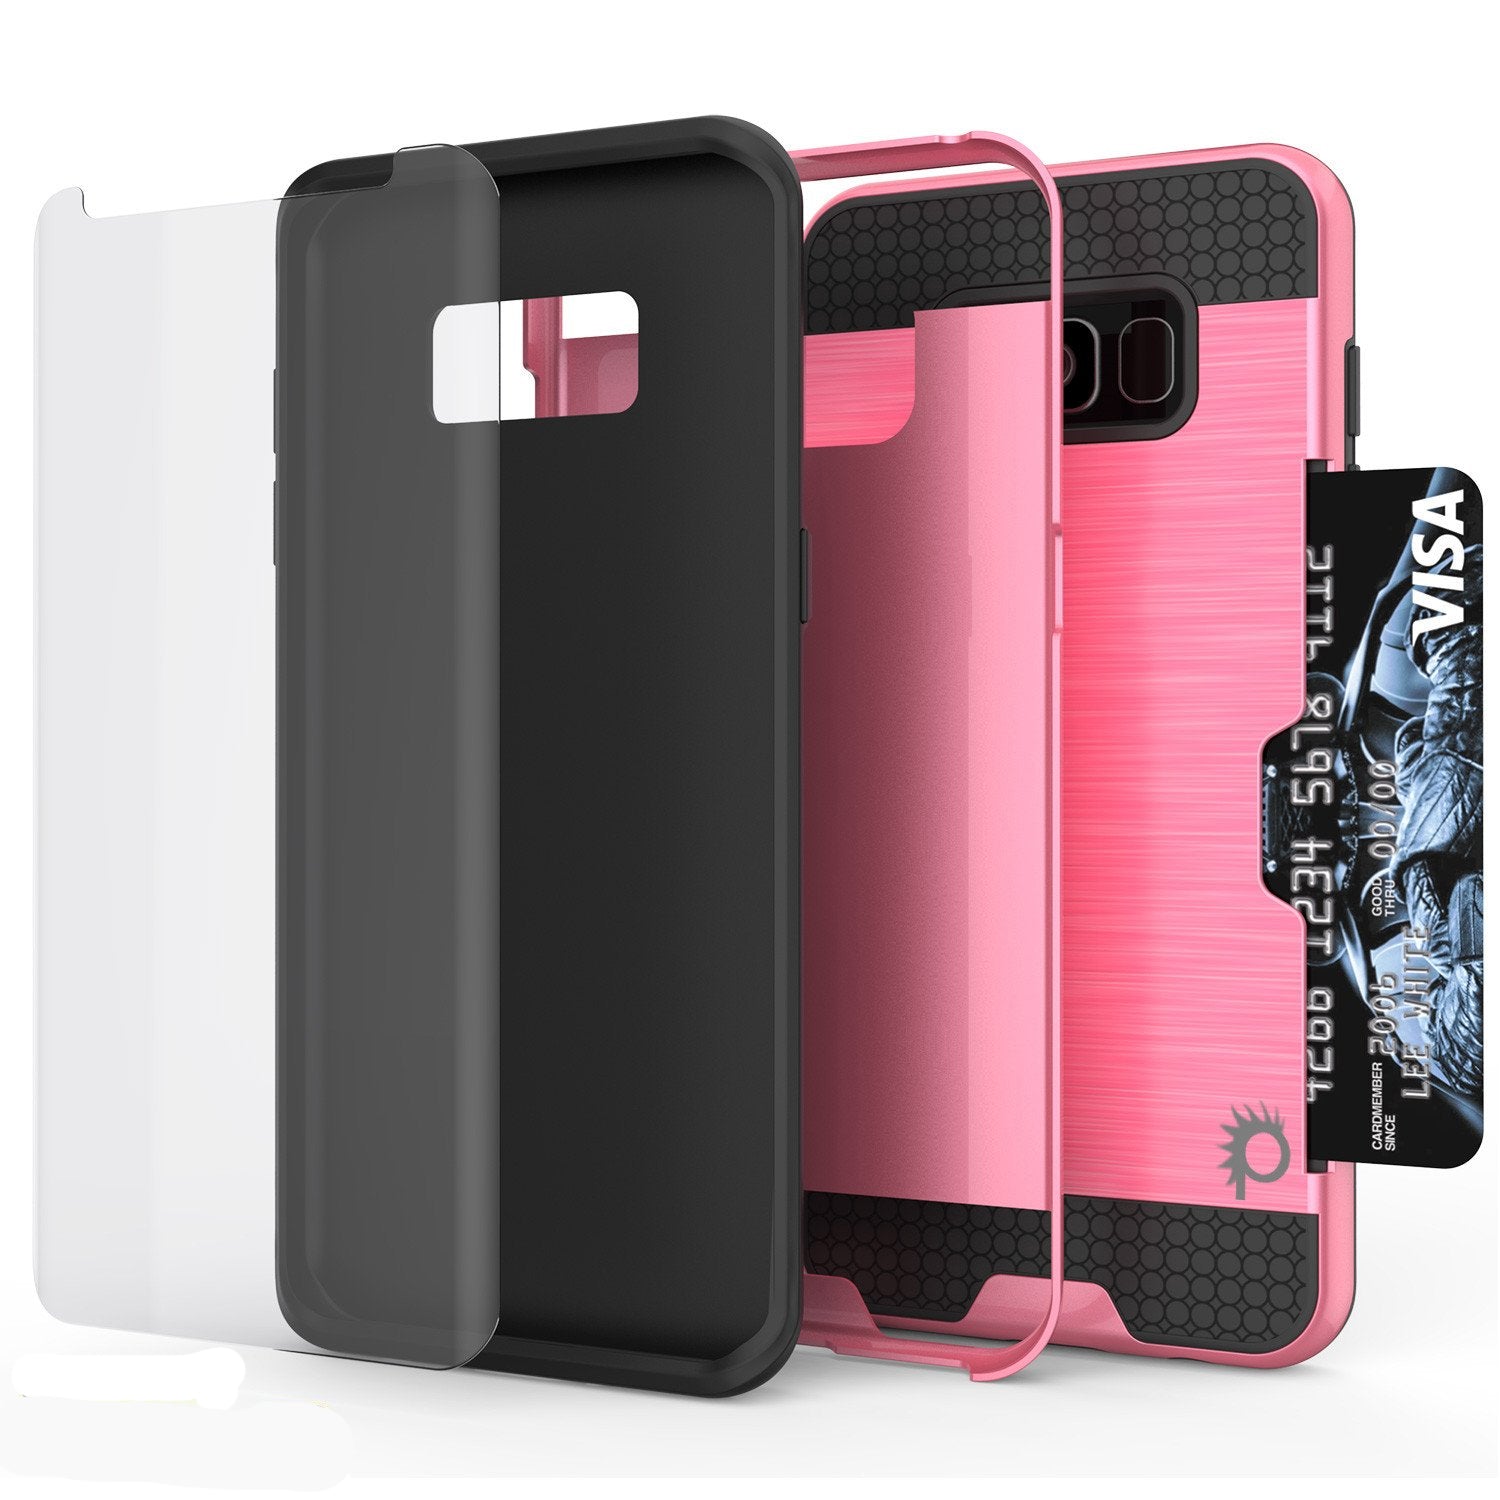 Galaxy S8 Plus Dual-Layer Anti-Shock Screen Protector Case [Pink]